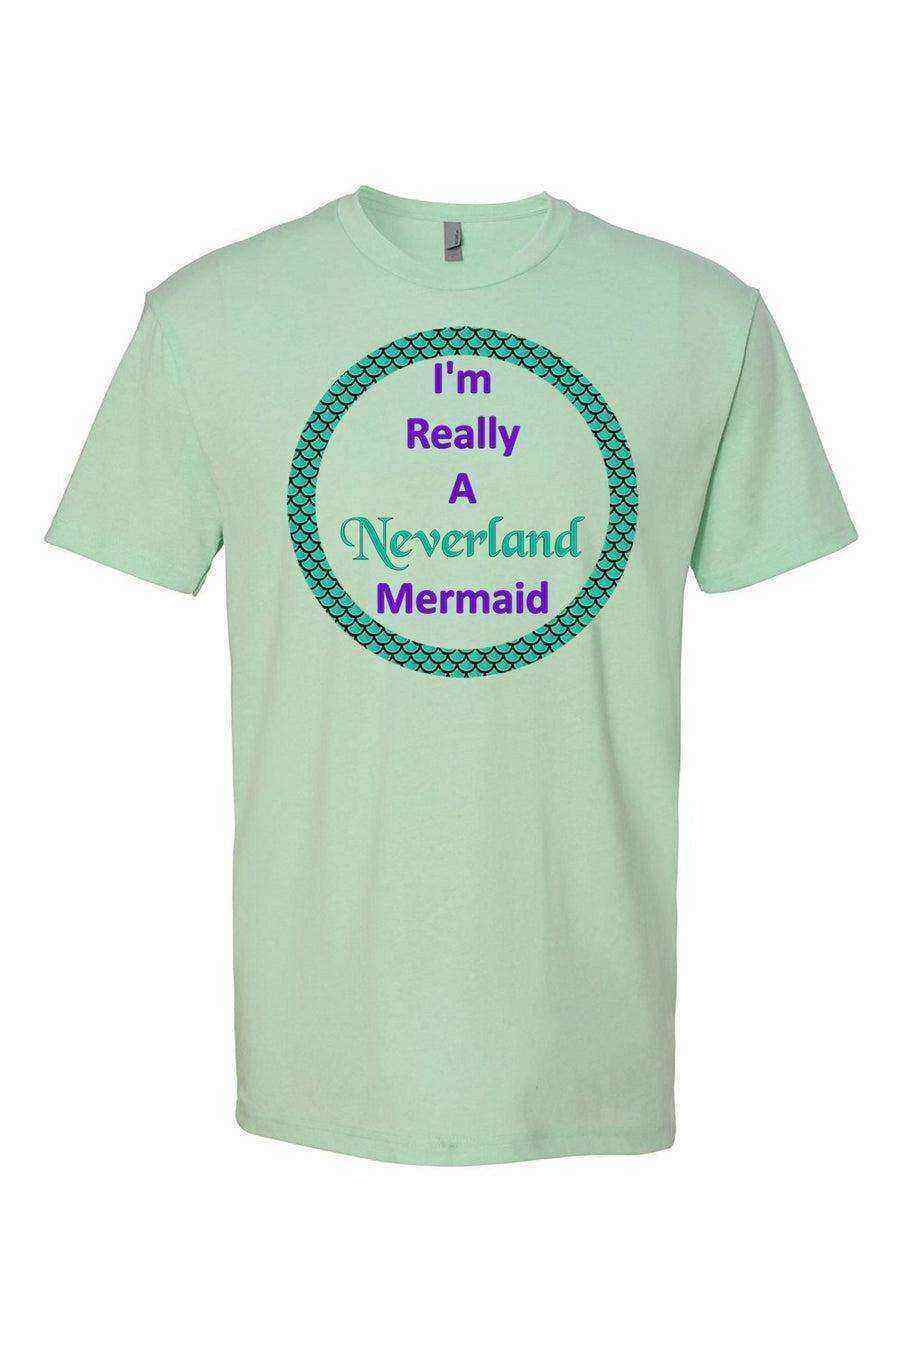 Im Really A Neverland Mermaid Tee - Dylan's Tees